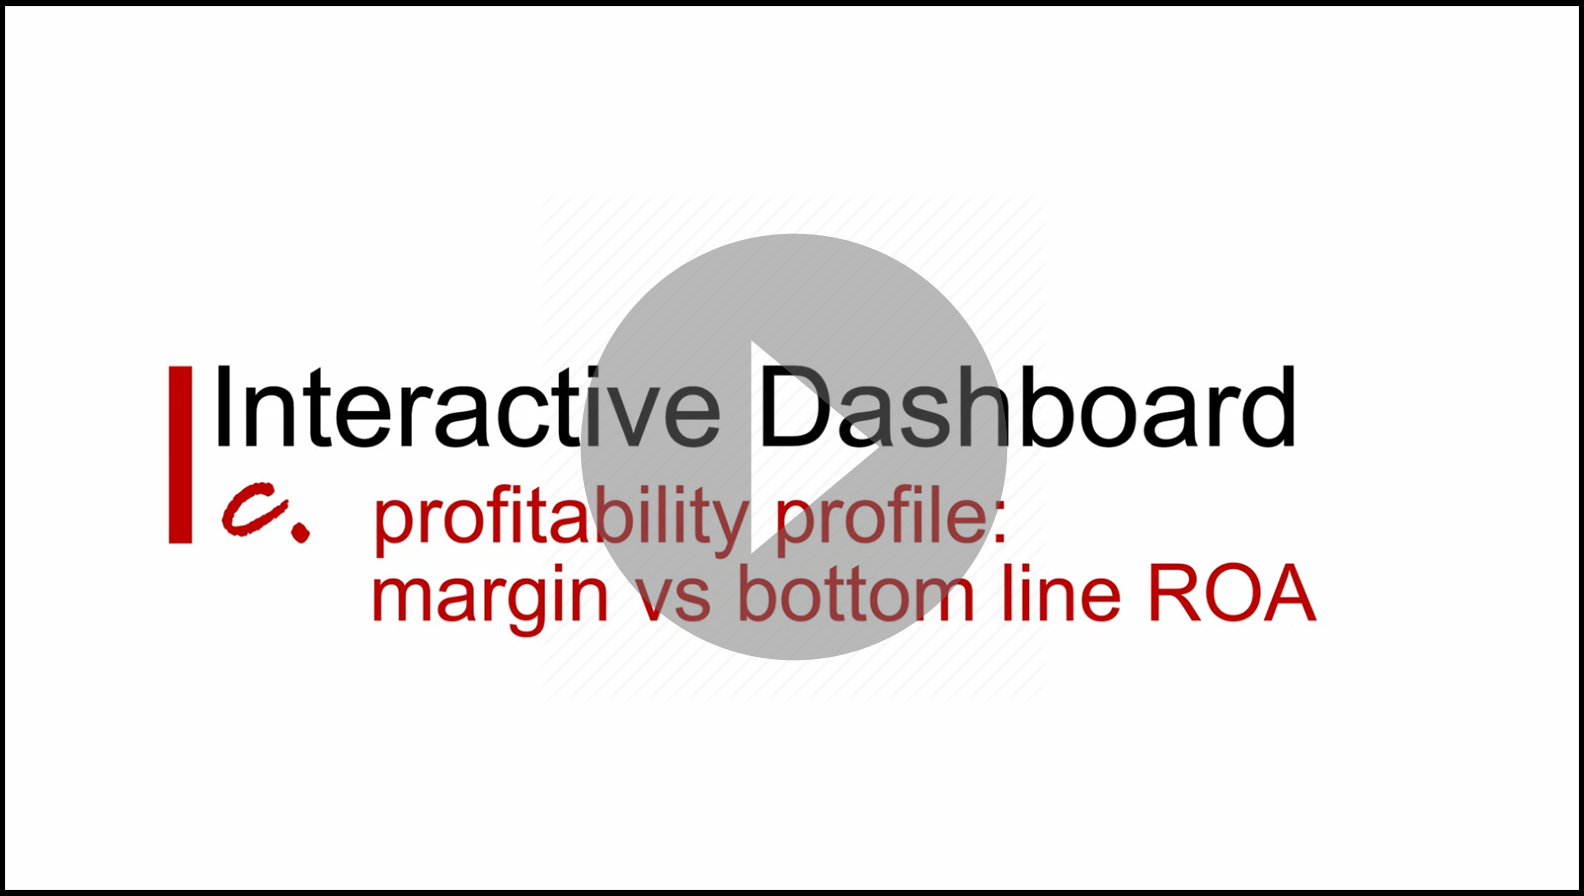 Interactive Dashboard - c. profitability profile: margin vs bottom line ROA